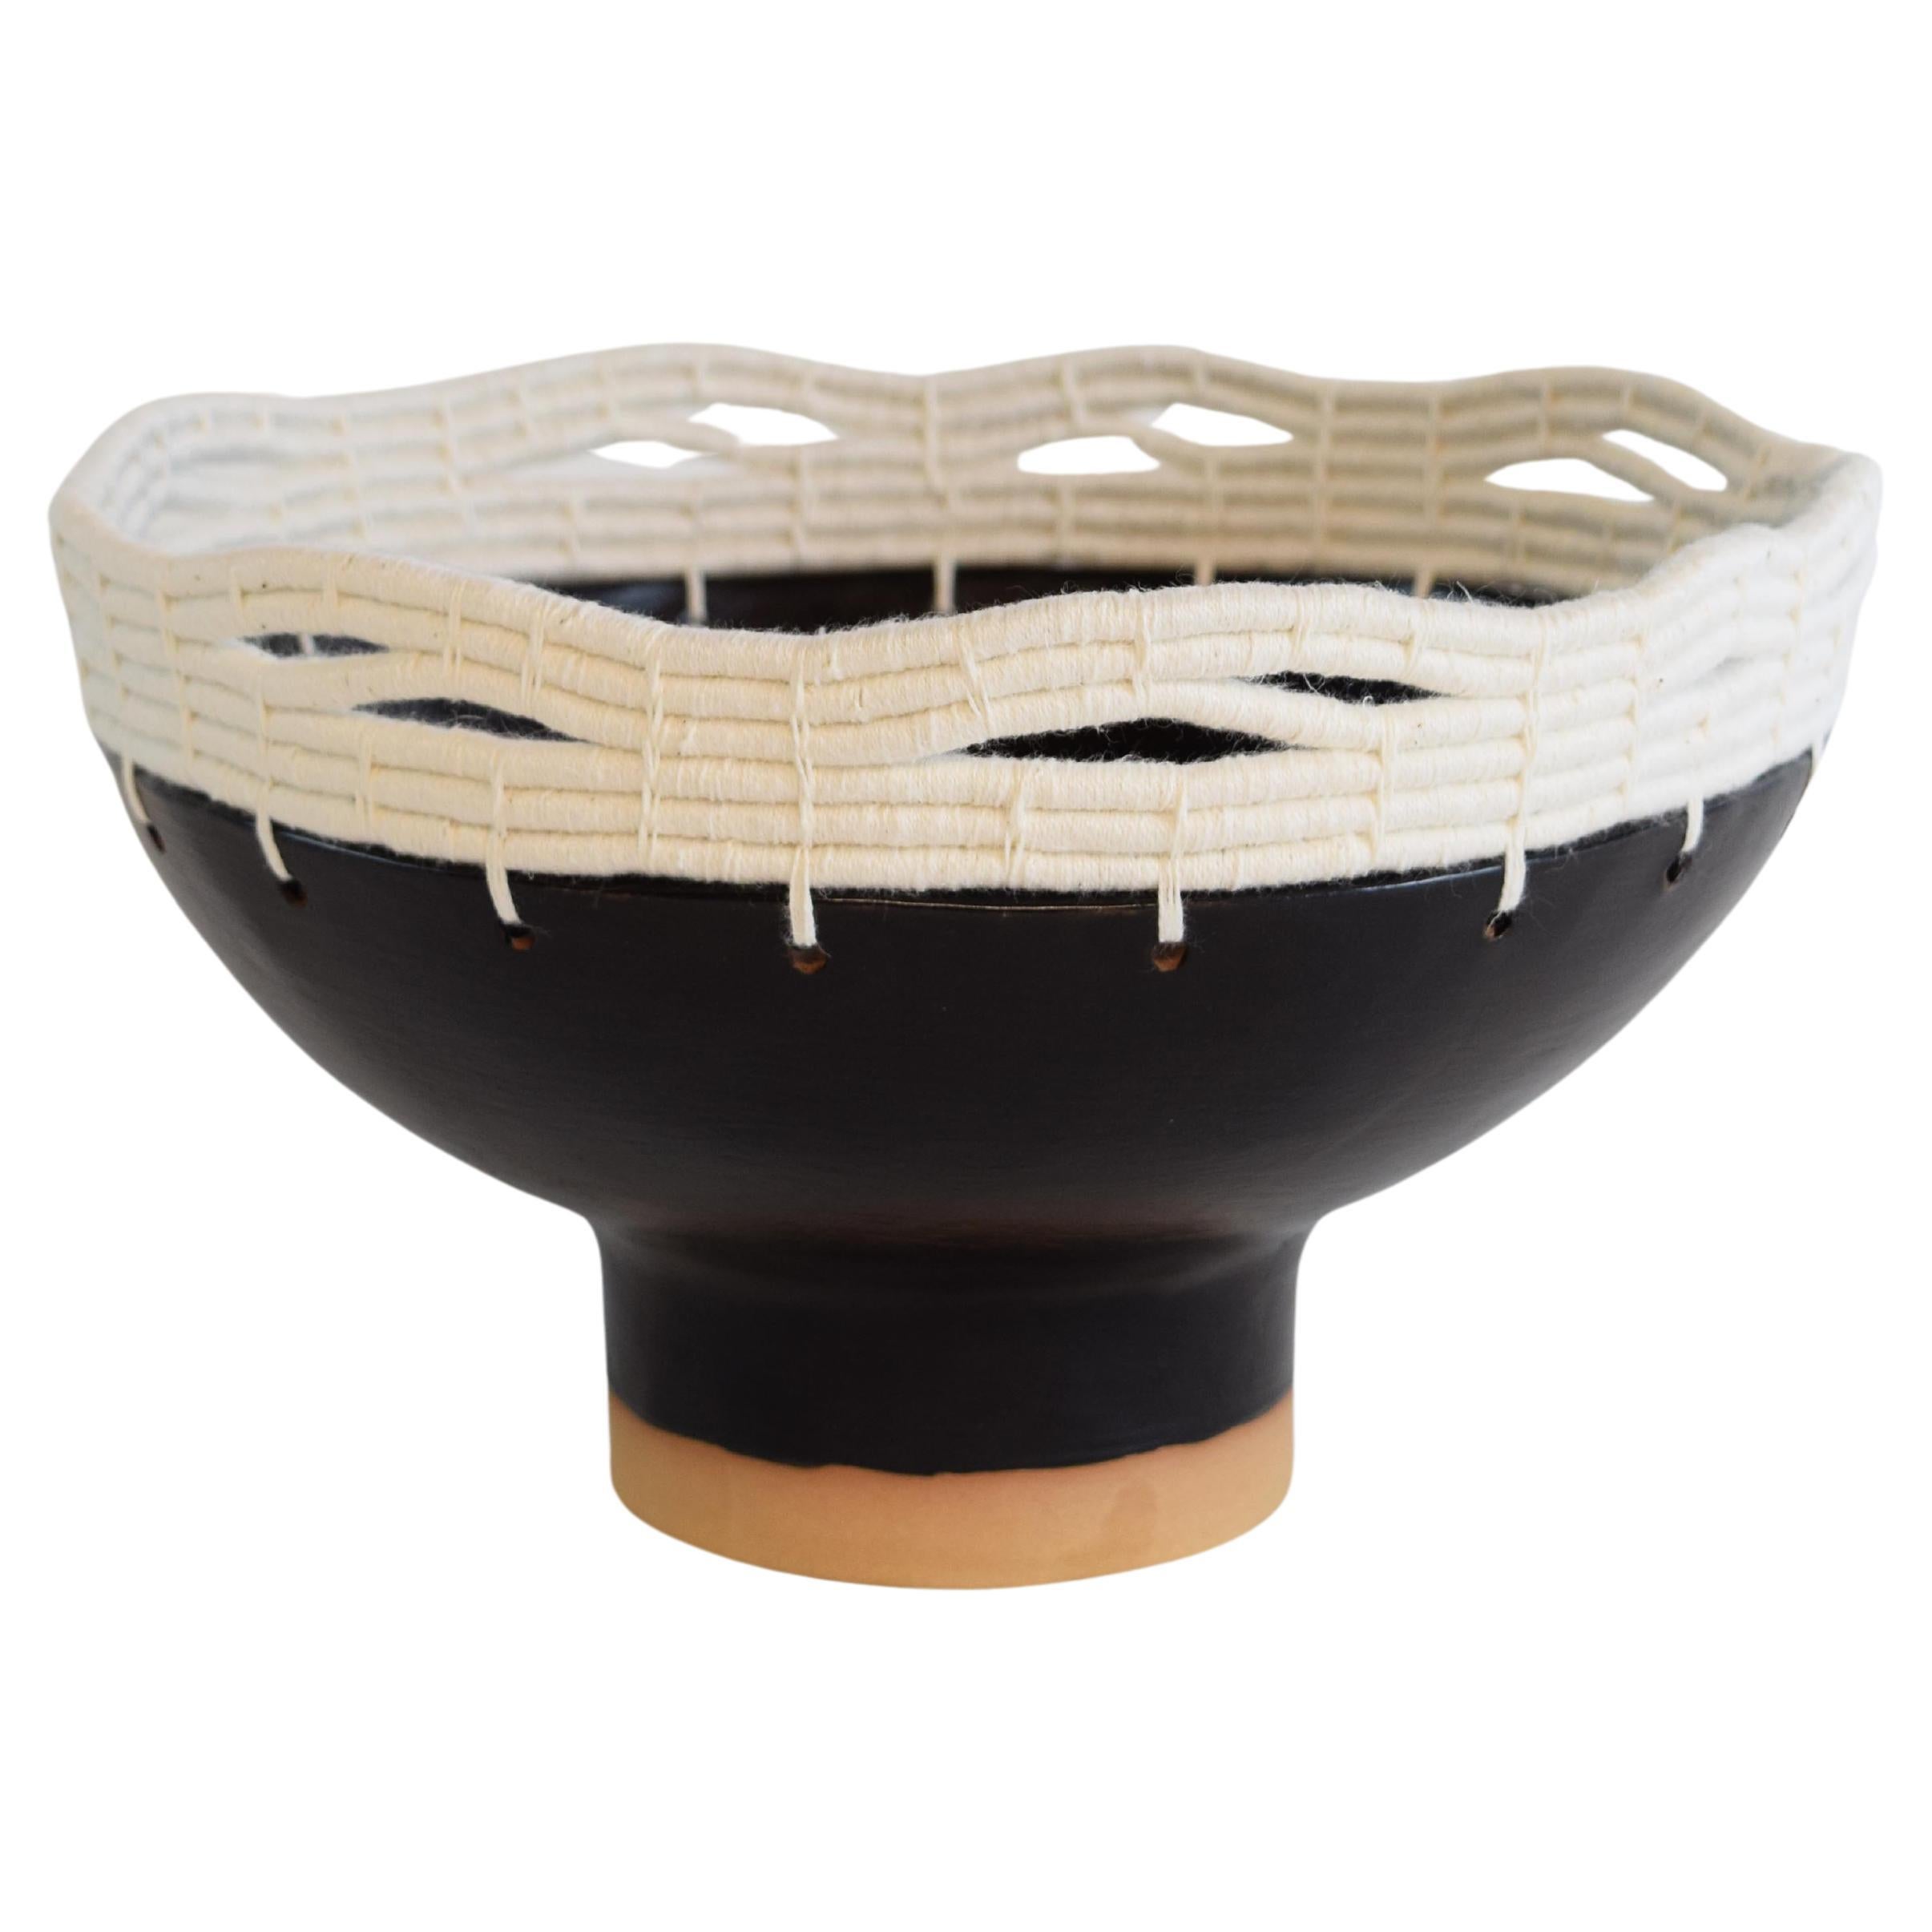 One of a Kind Handmade Ceramic Bowl #804, Satin Black Glaze & Woven White Cotton For Sale